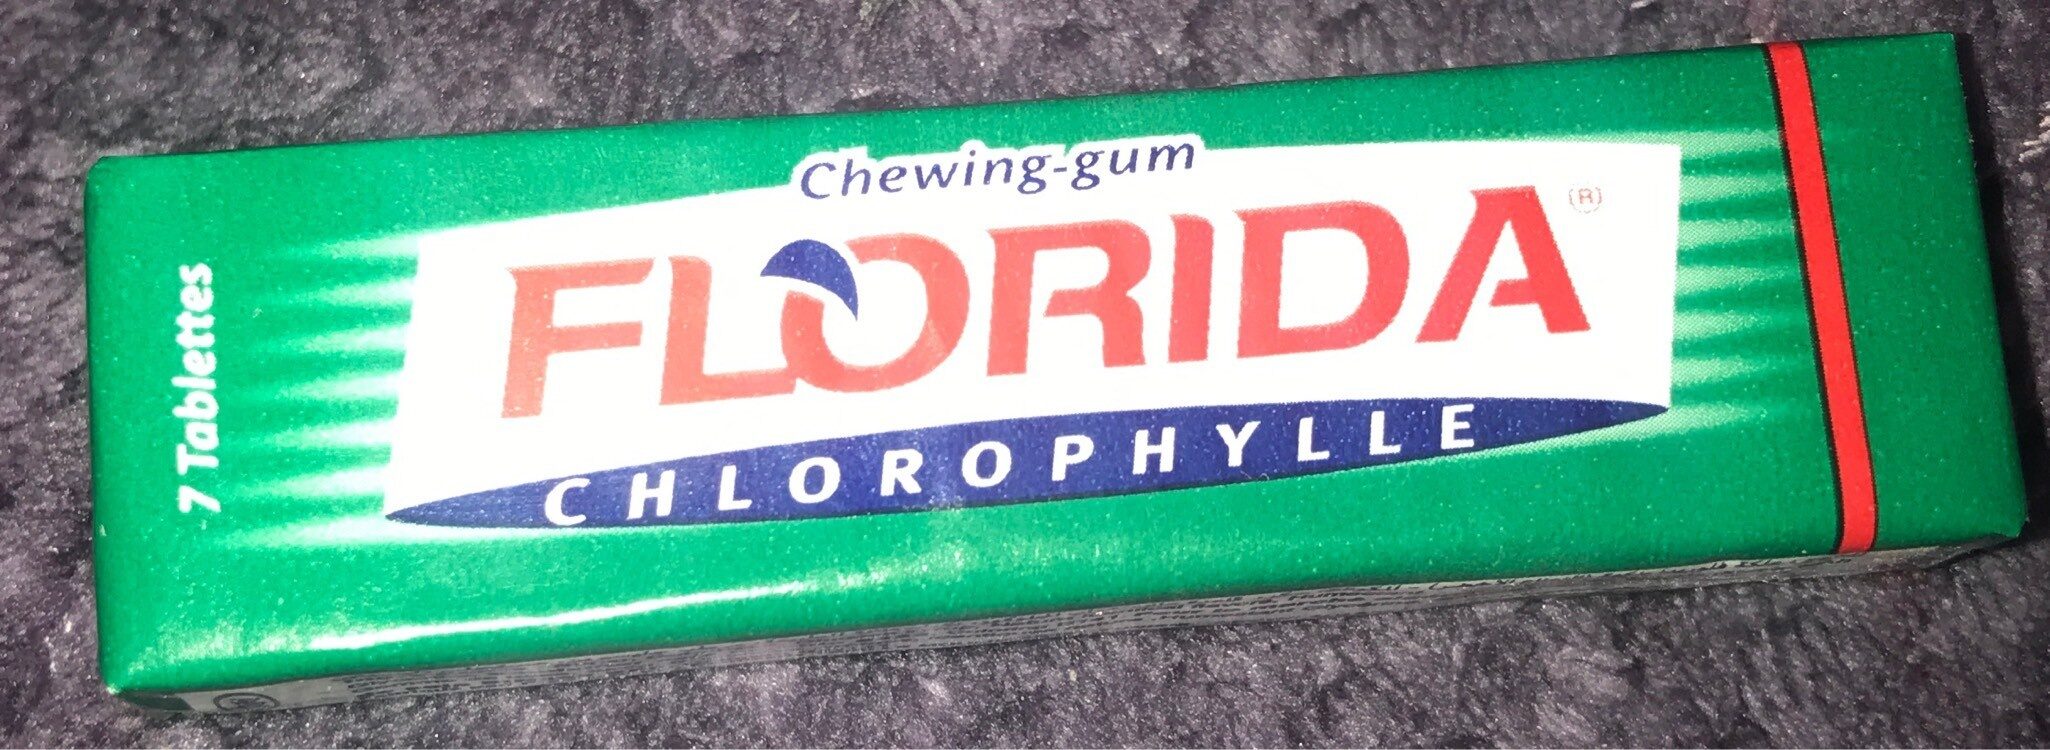 Chewing-gum a la Chlorophylle - Product - fr